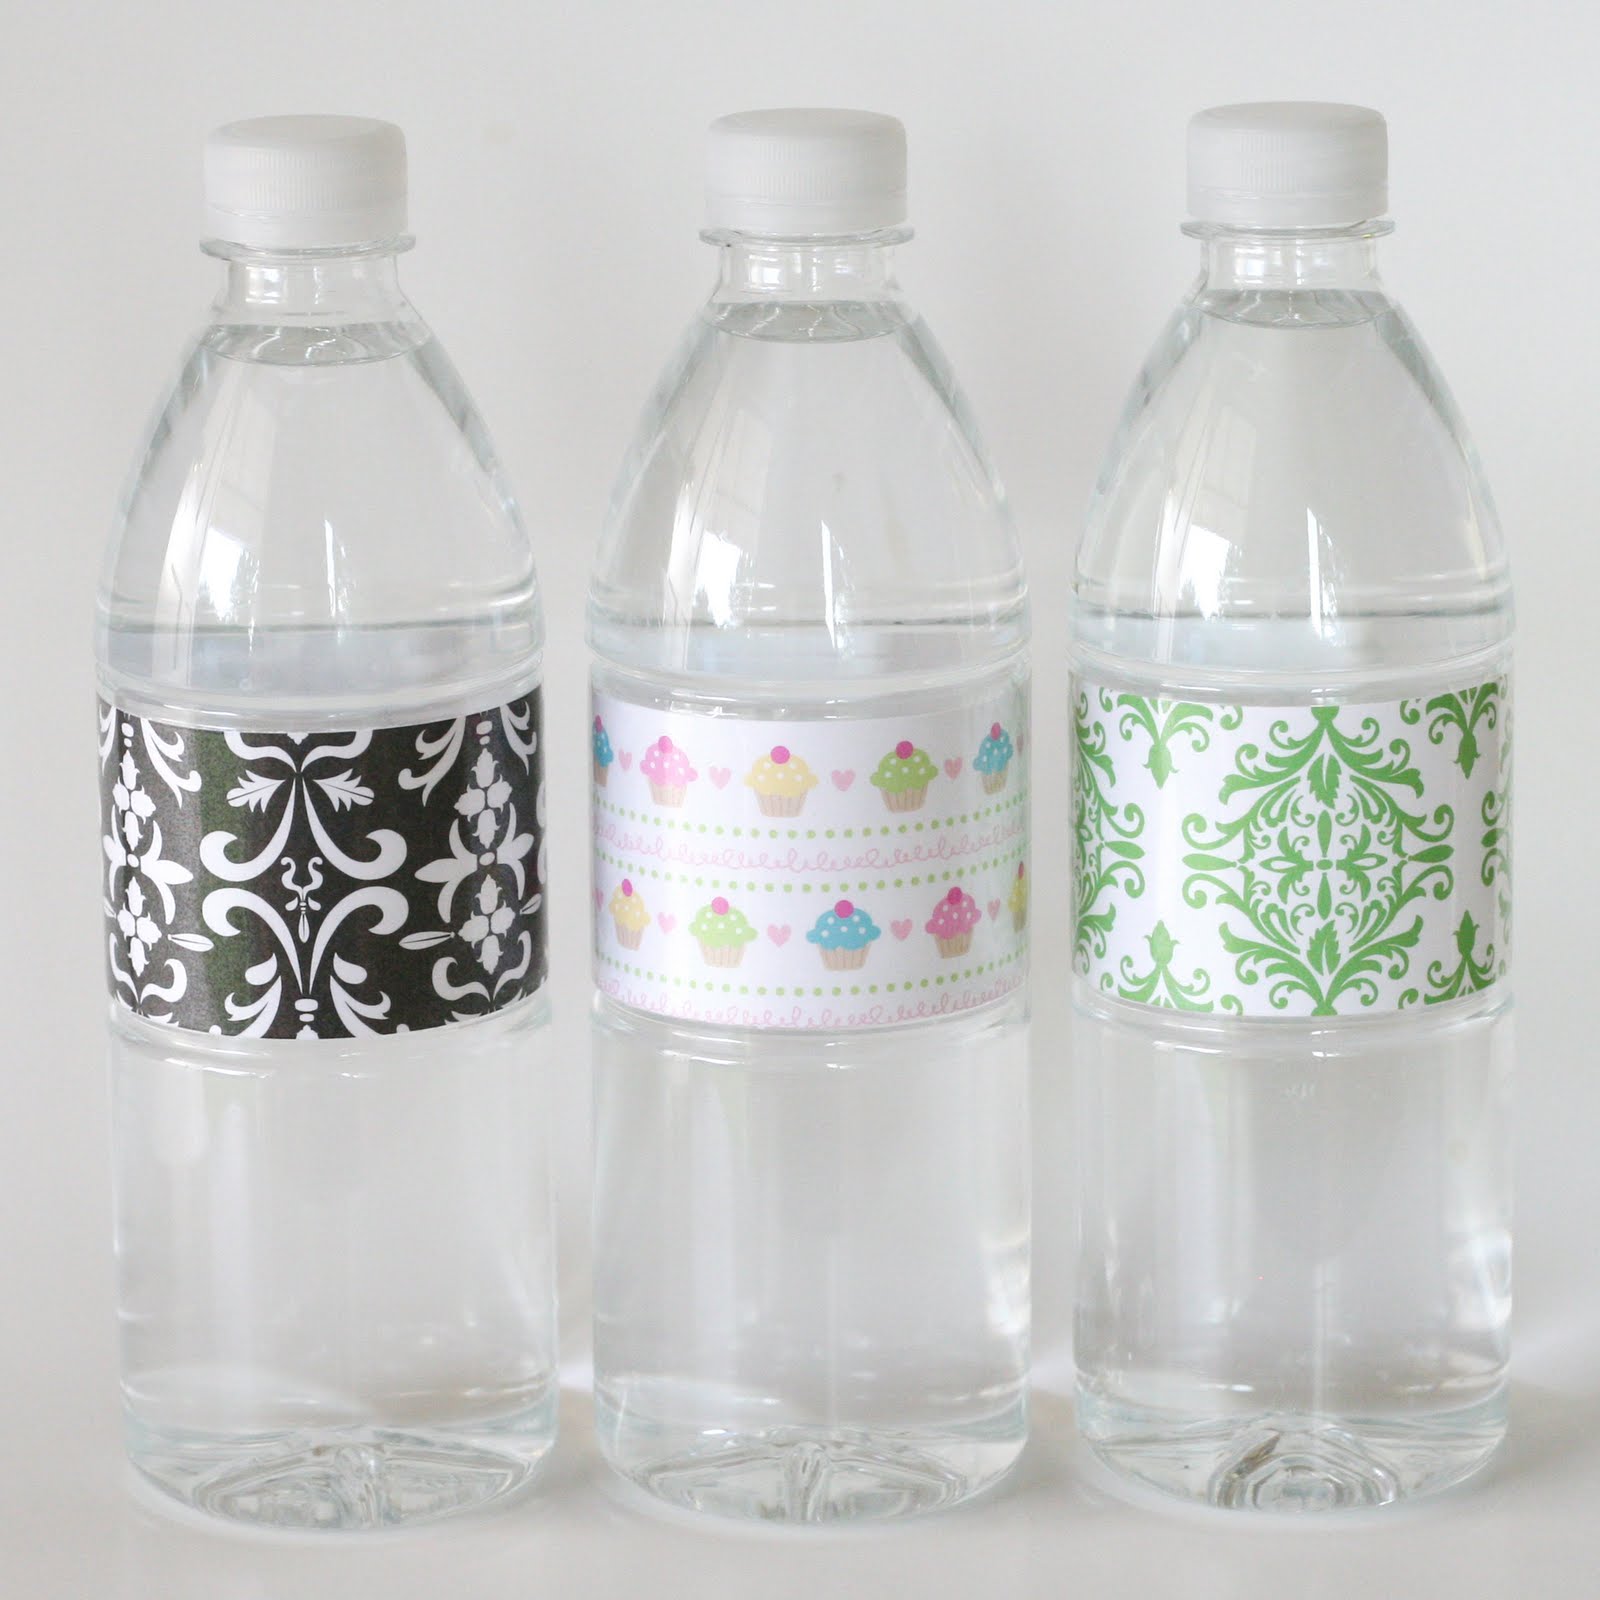 Water Bottle Labels - Personalized Water Bottle Labels - Online Labels